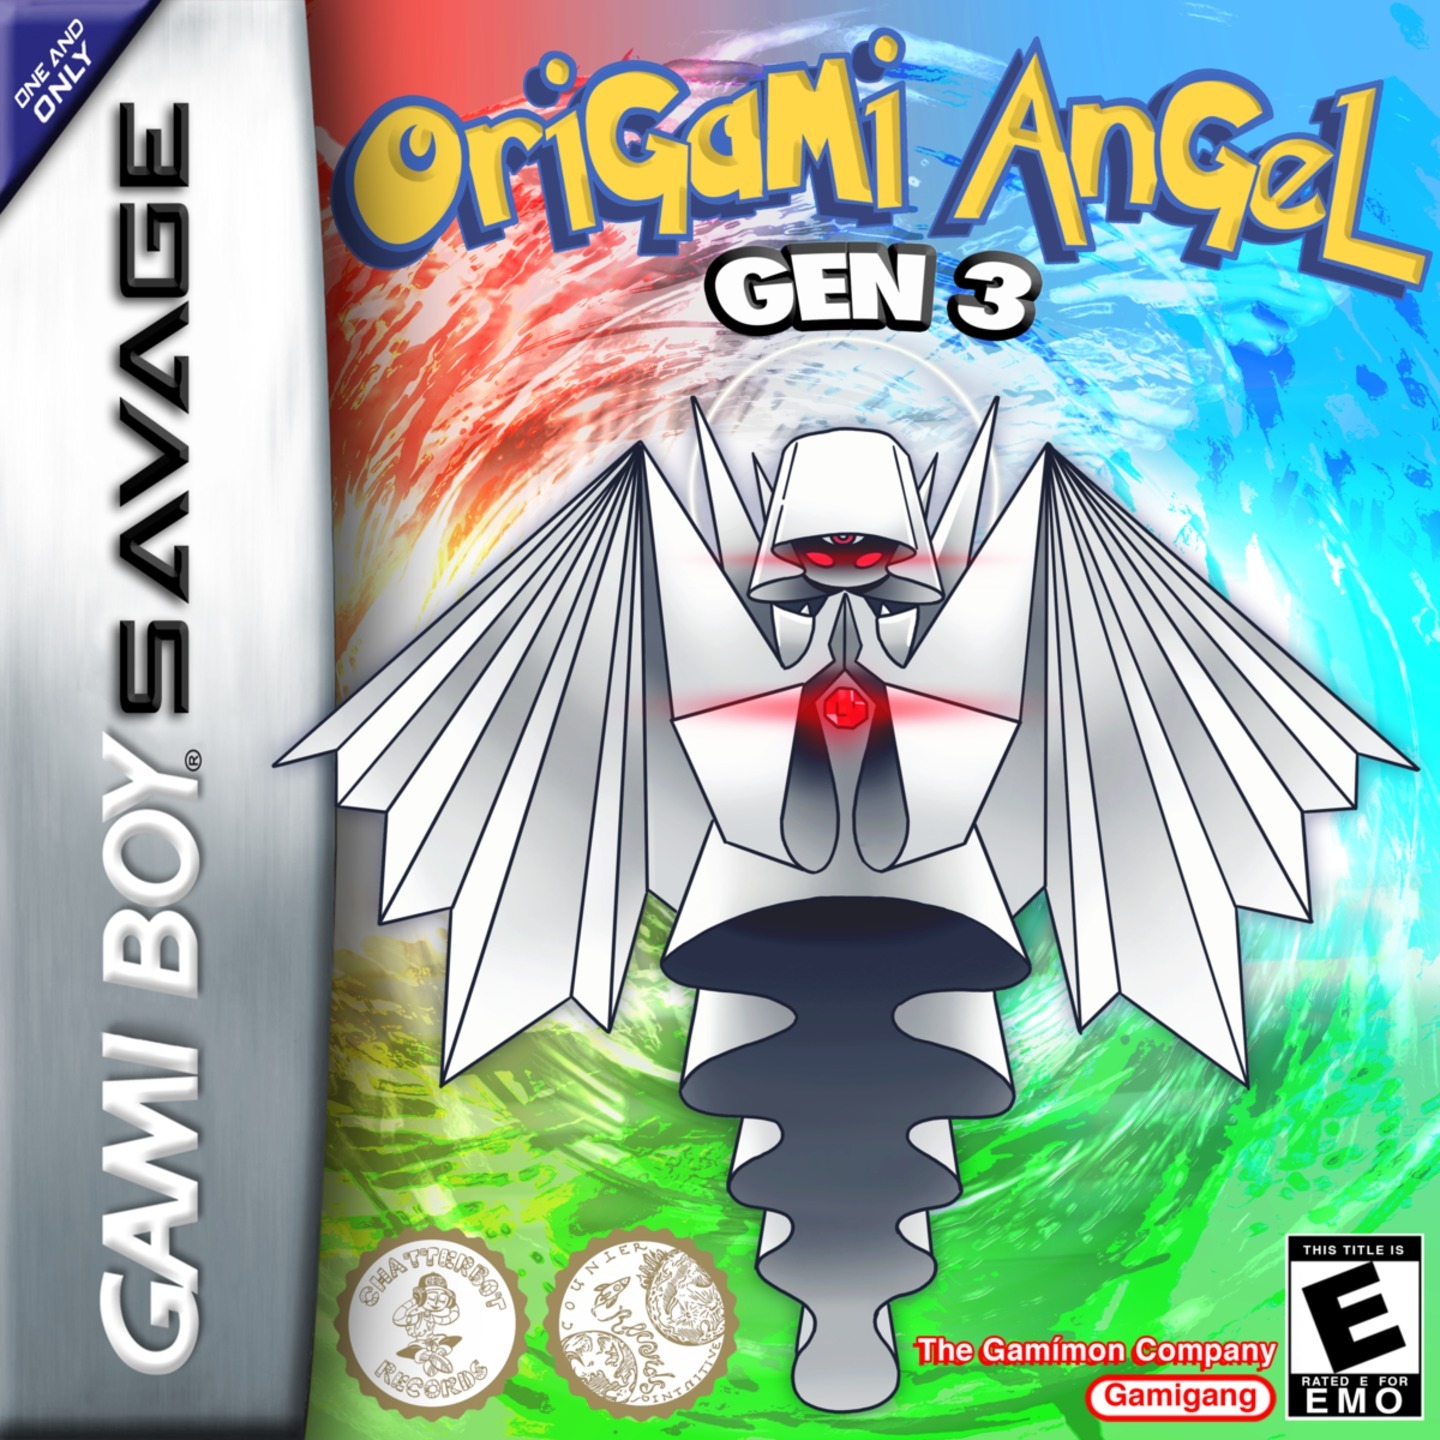 ORIGAMI ANGEL - Gen 3 7 Clear Vinyl